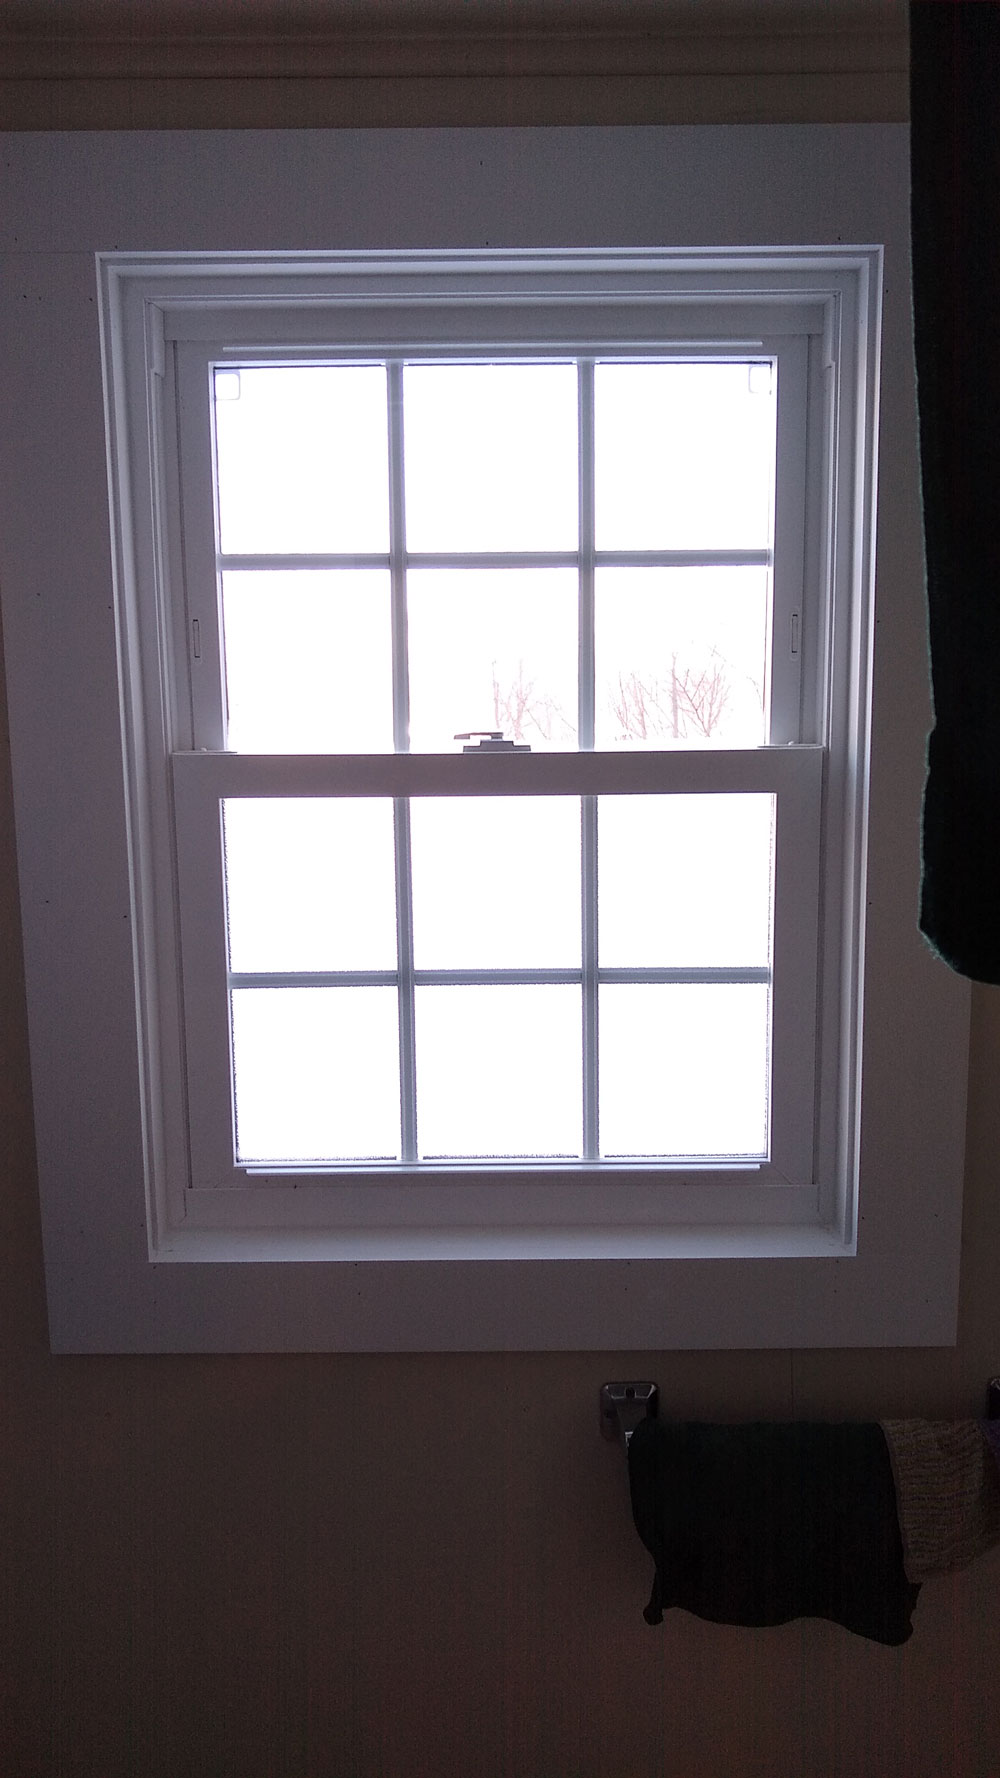 New sliding vinyl window in century home in Hadley, MA